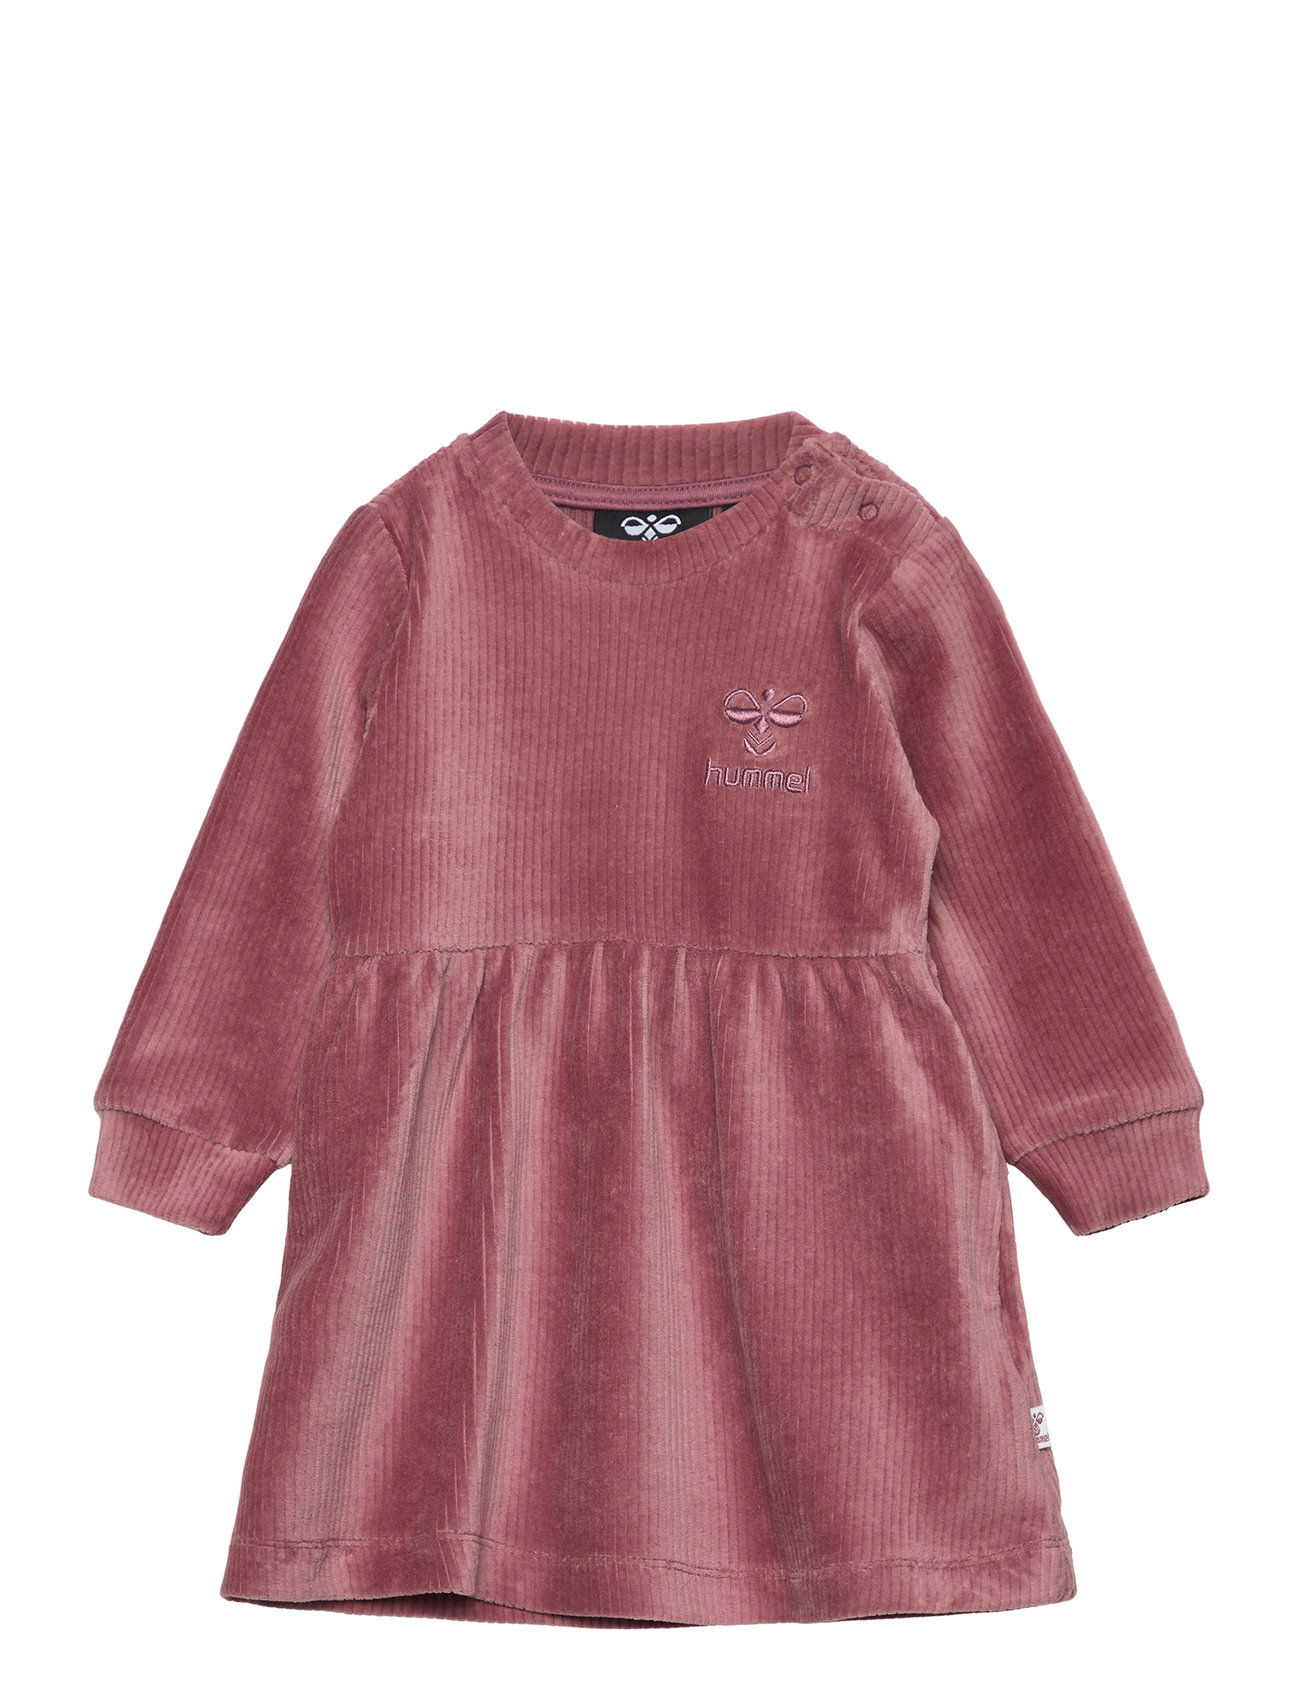 Hmlcordy Dress L/S Dresses & Skirts Dresses Baby Dresses Long-sleeved Baby Dresses Pink Hummel